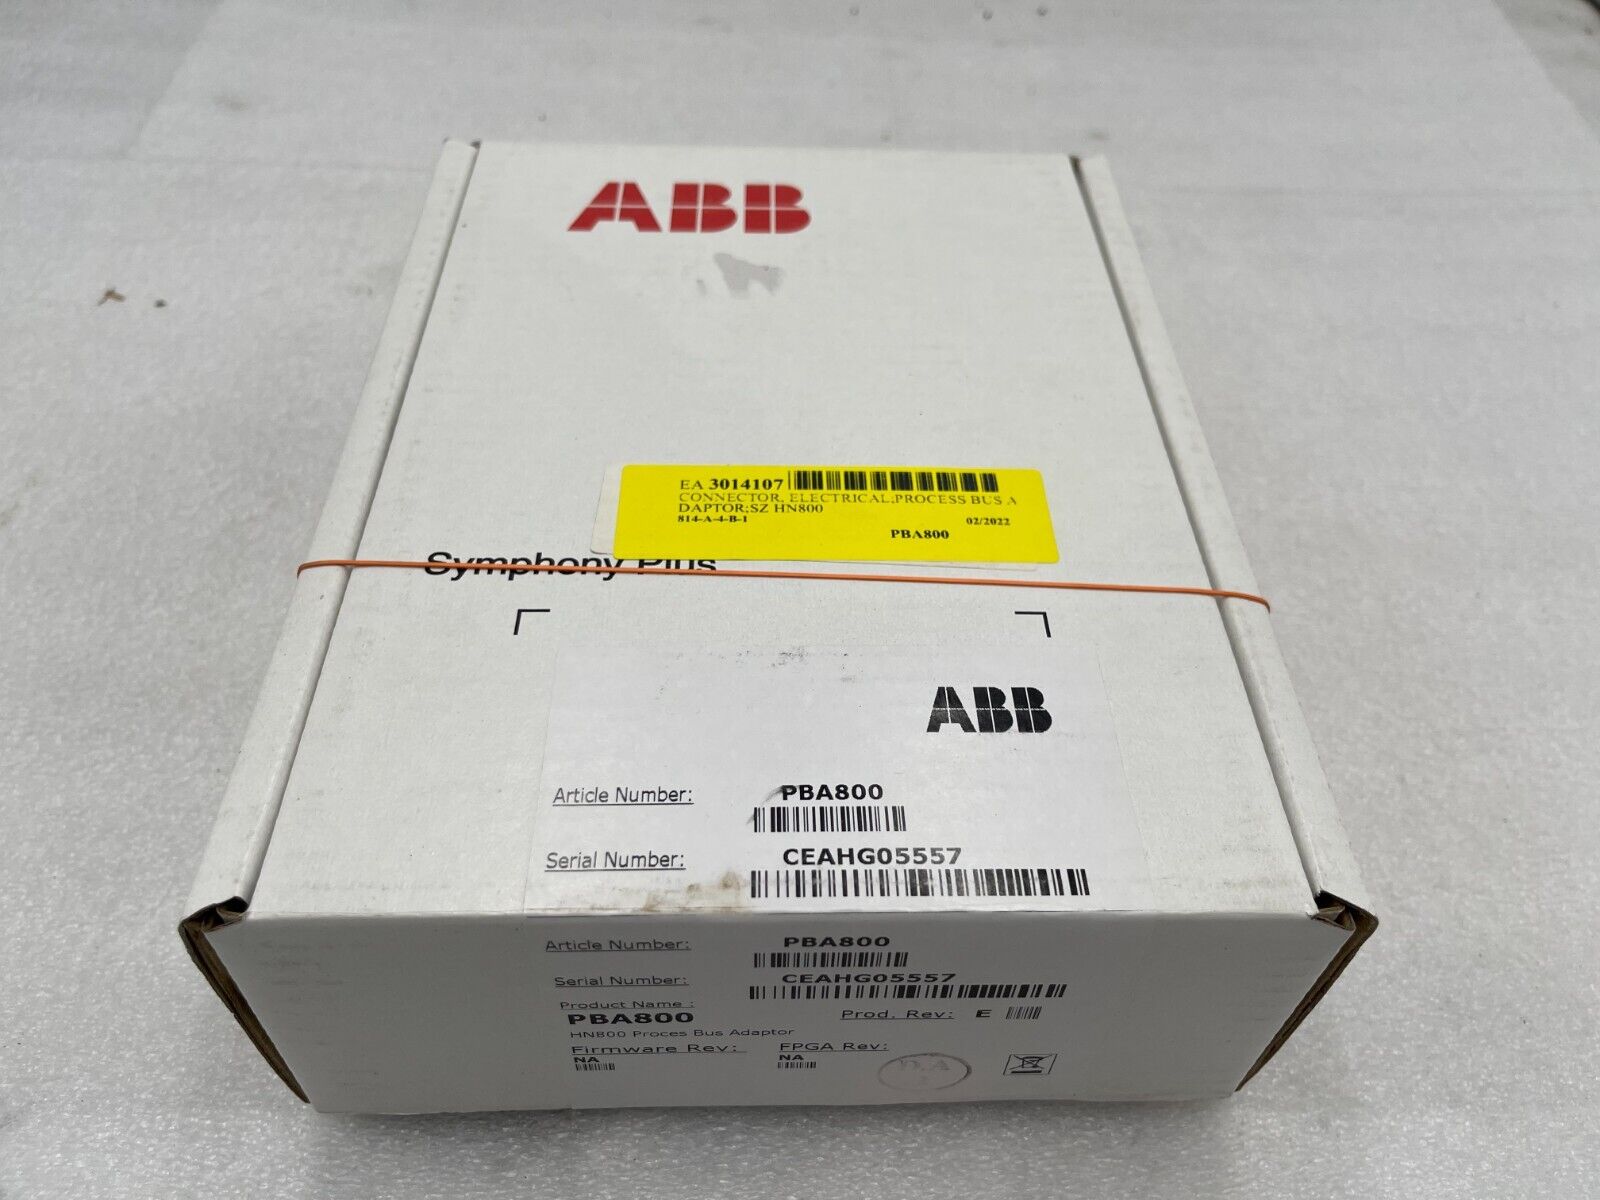 ABB PBA800 Symphony Plus Process Bus Adapter Rev E Sealed Brand NEW STOCK K-2102